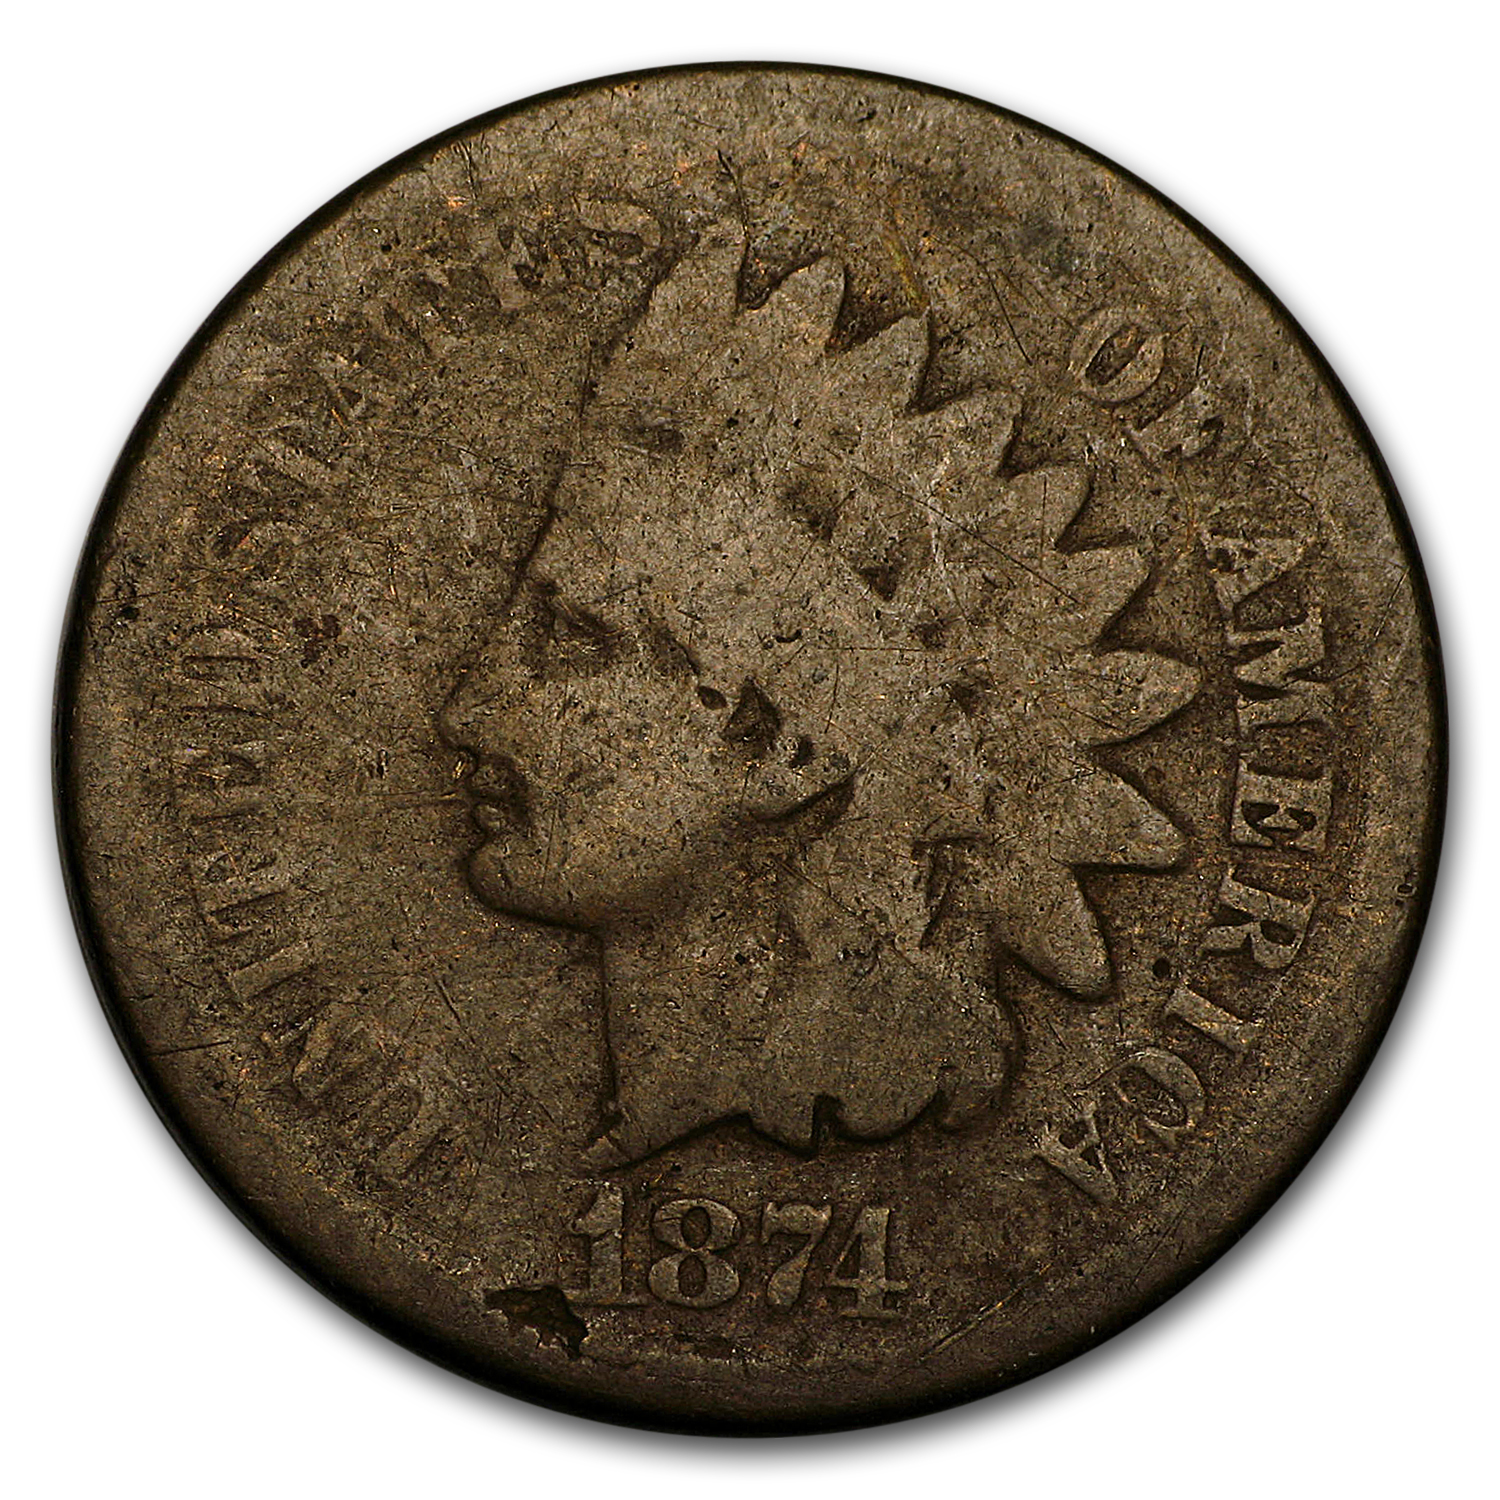 Buy 1874 Indian Head Cent Good